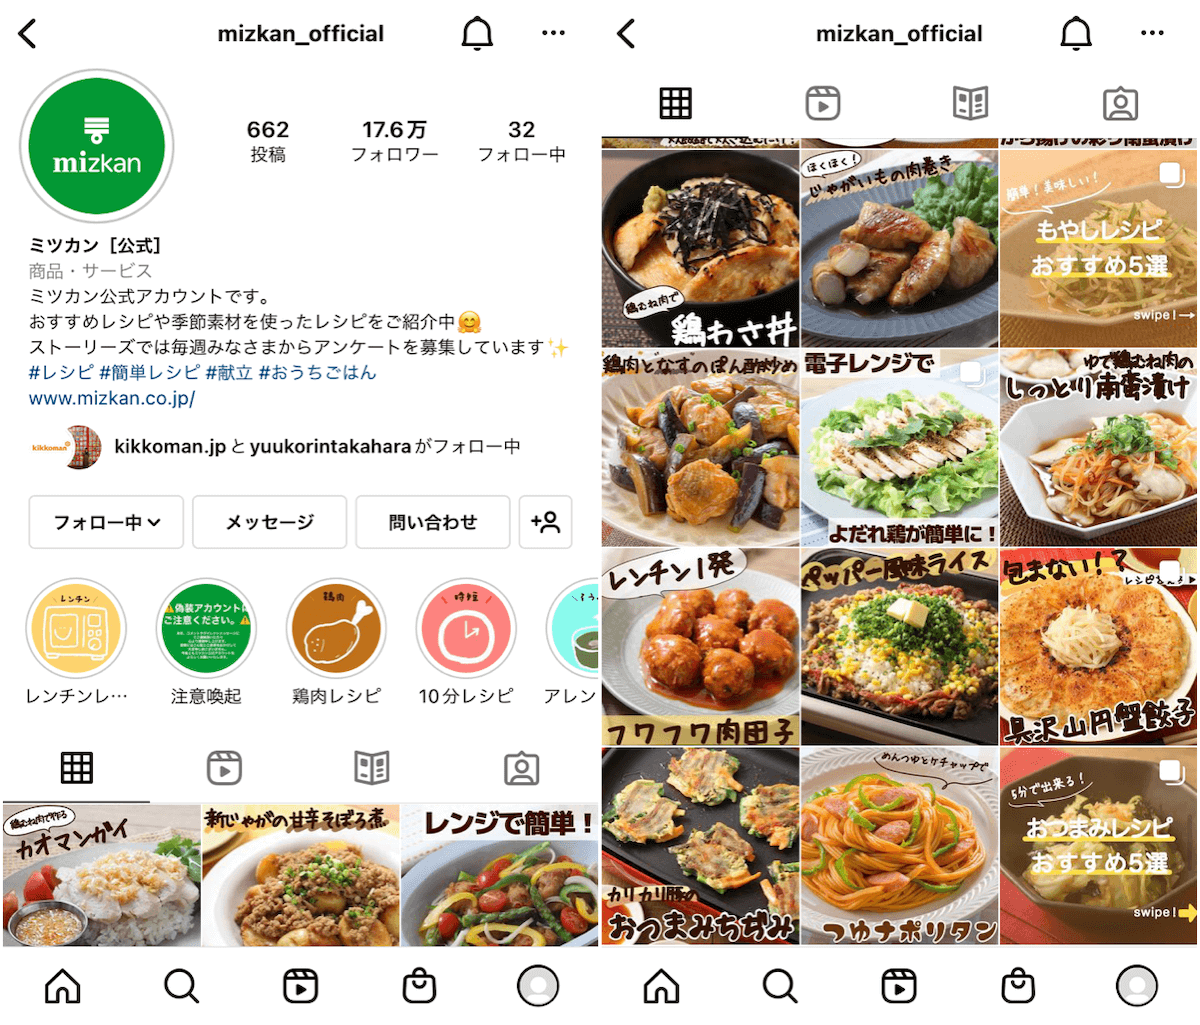 instagram-foods-official-mizkan_official